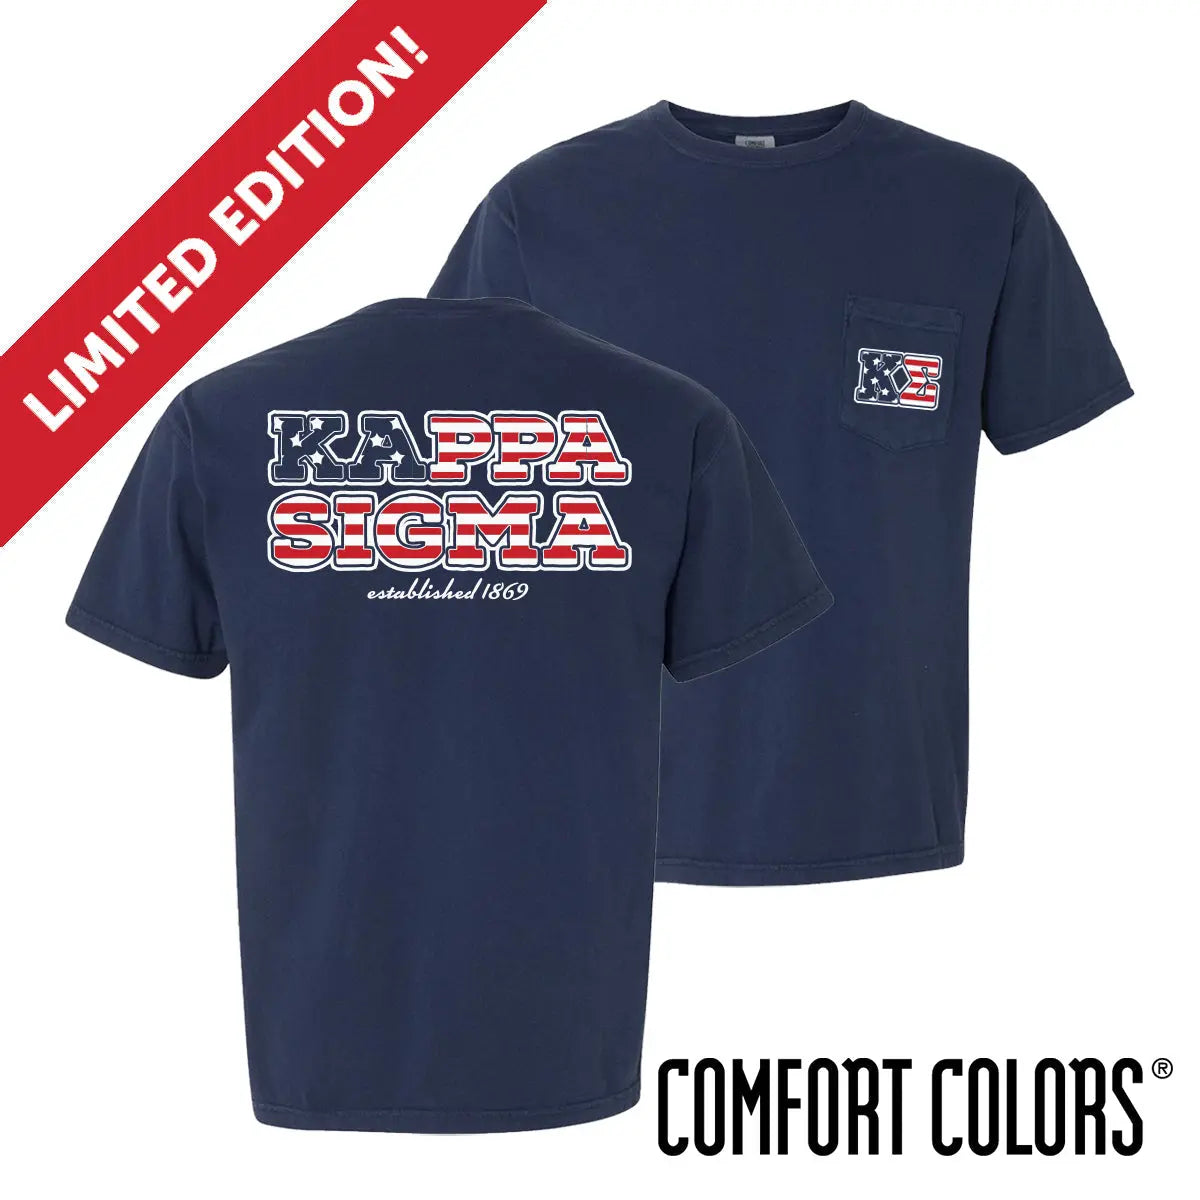 New! Kappa Sig Comfort Colors Patriotic Pride Short Sleeve Tee Kappa Sigma